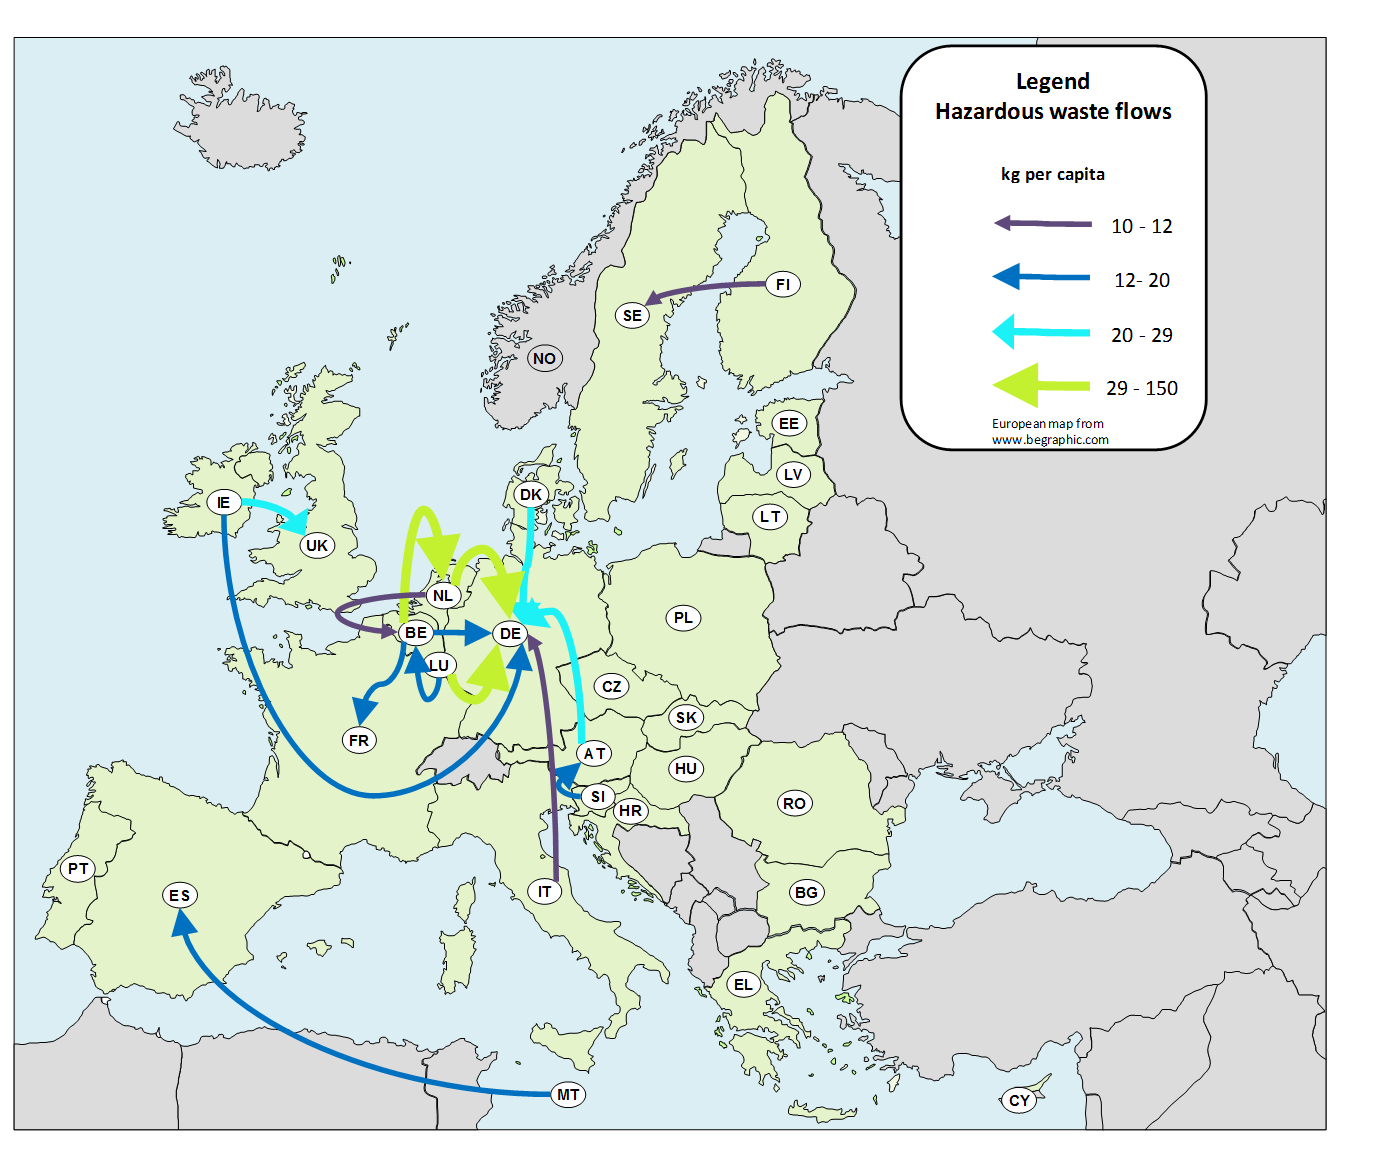 Hazardous_waste_shipments_from_EU_Member_States_%28larger_flows%29%2C_2013.png